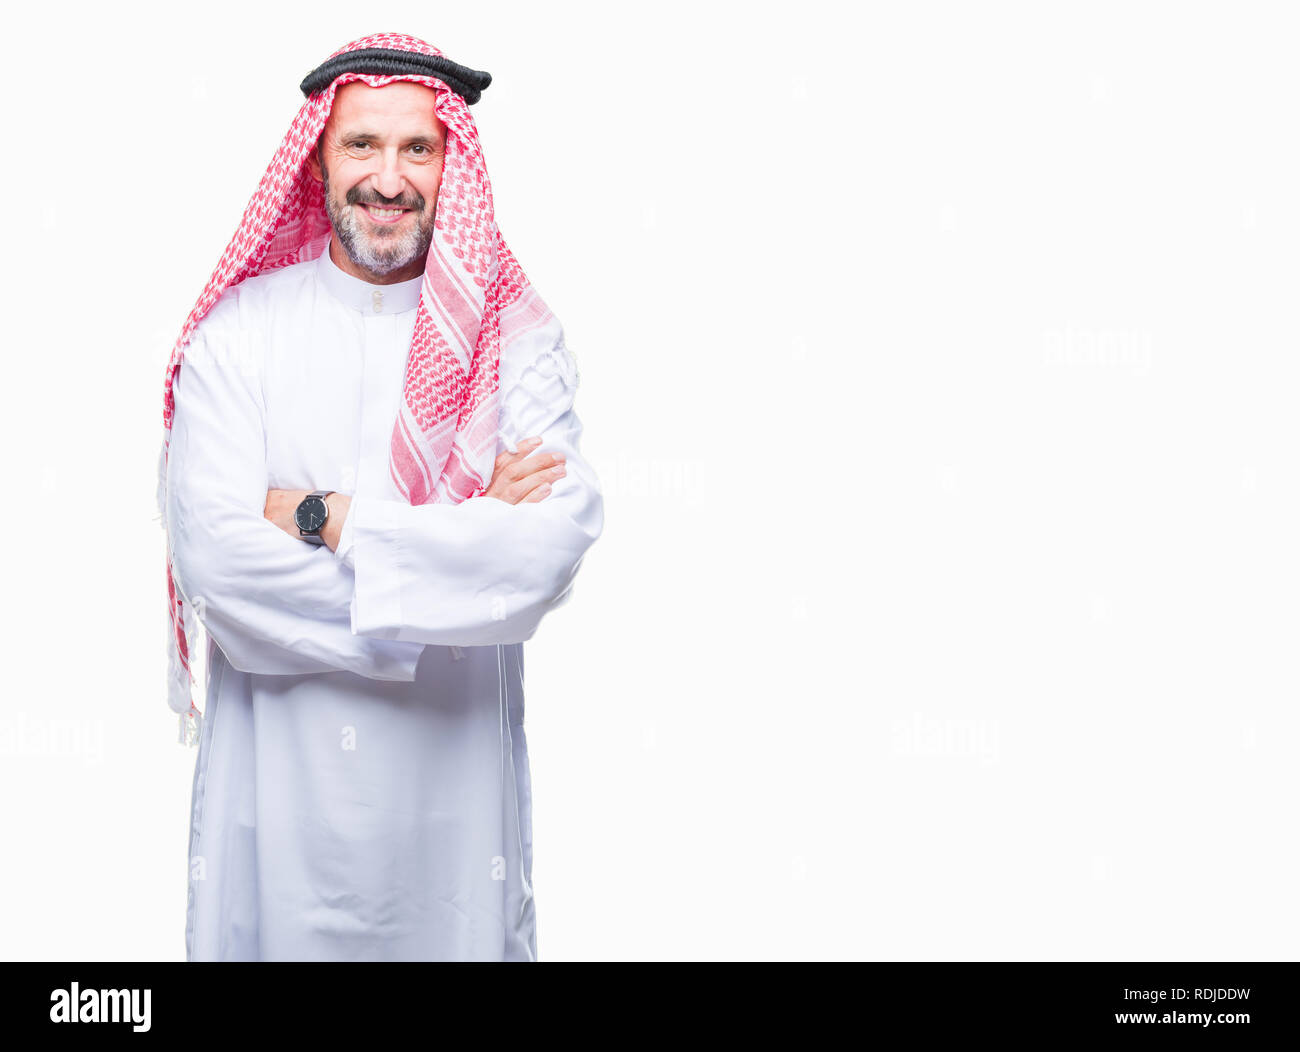 Senior uomo arabo indossando keffiyeh su sfondo isolato buon viso sorridente con bracci incrociati guardando la telecamera. Persona positiva. Foto Stock